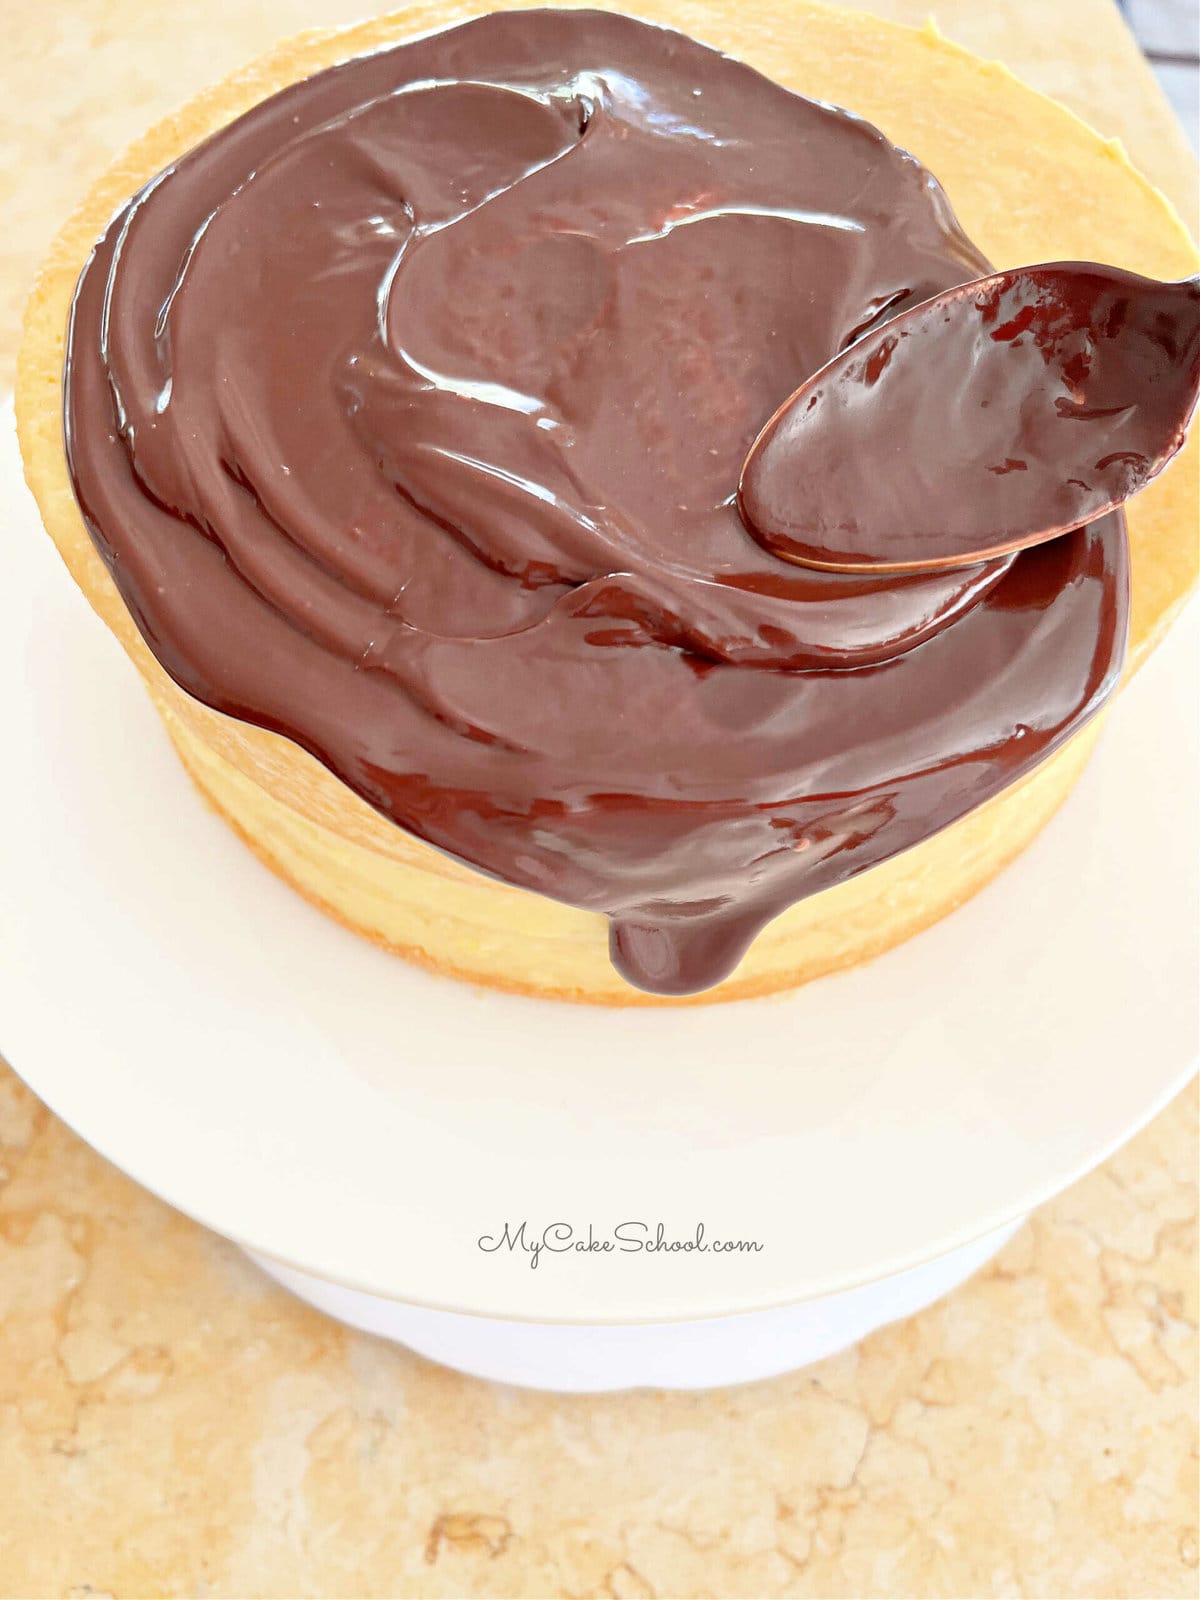 Applying Chocolate Glaze to Boston Cream Pie